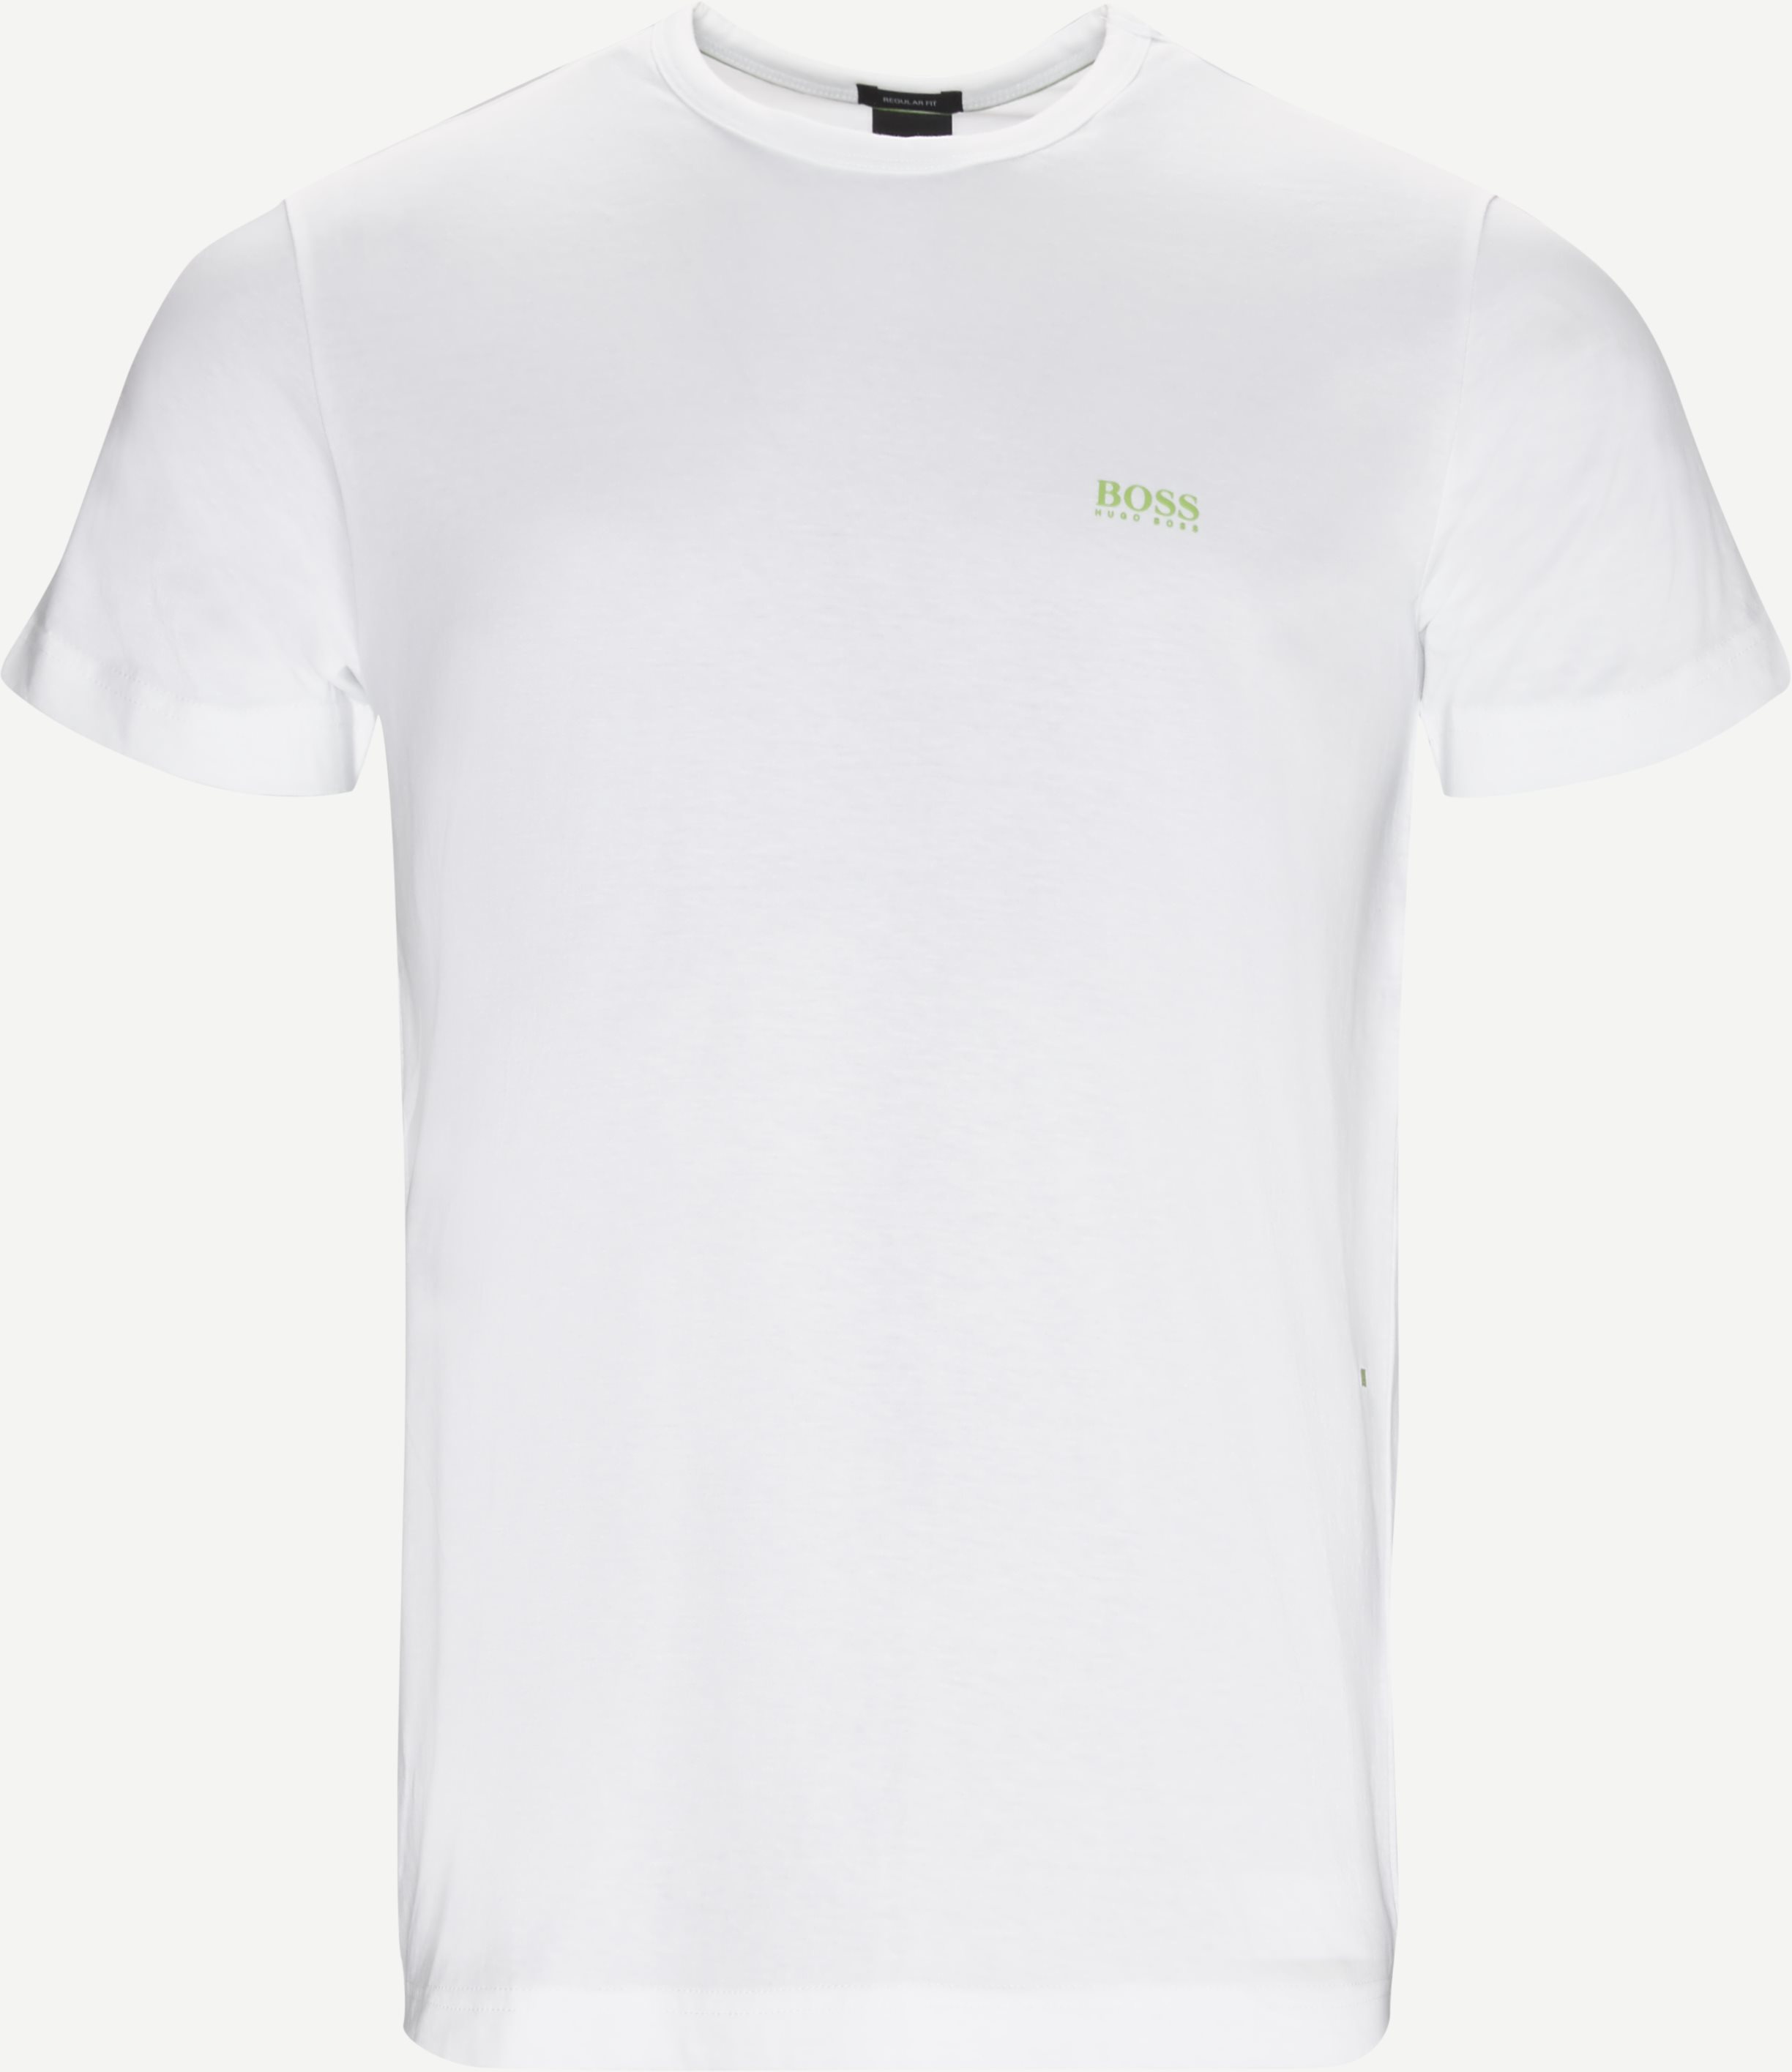 Tee T-shirt - T-shirts - Regular fit - White